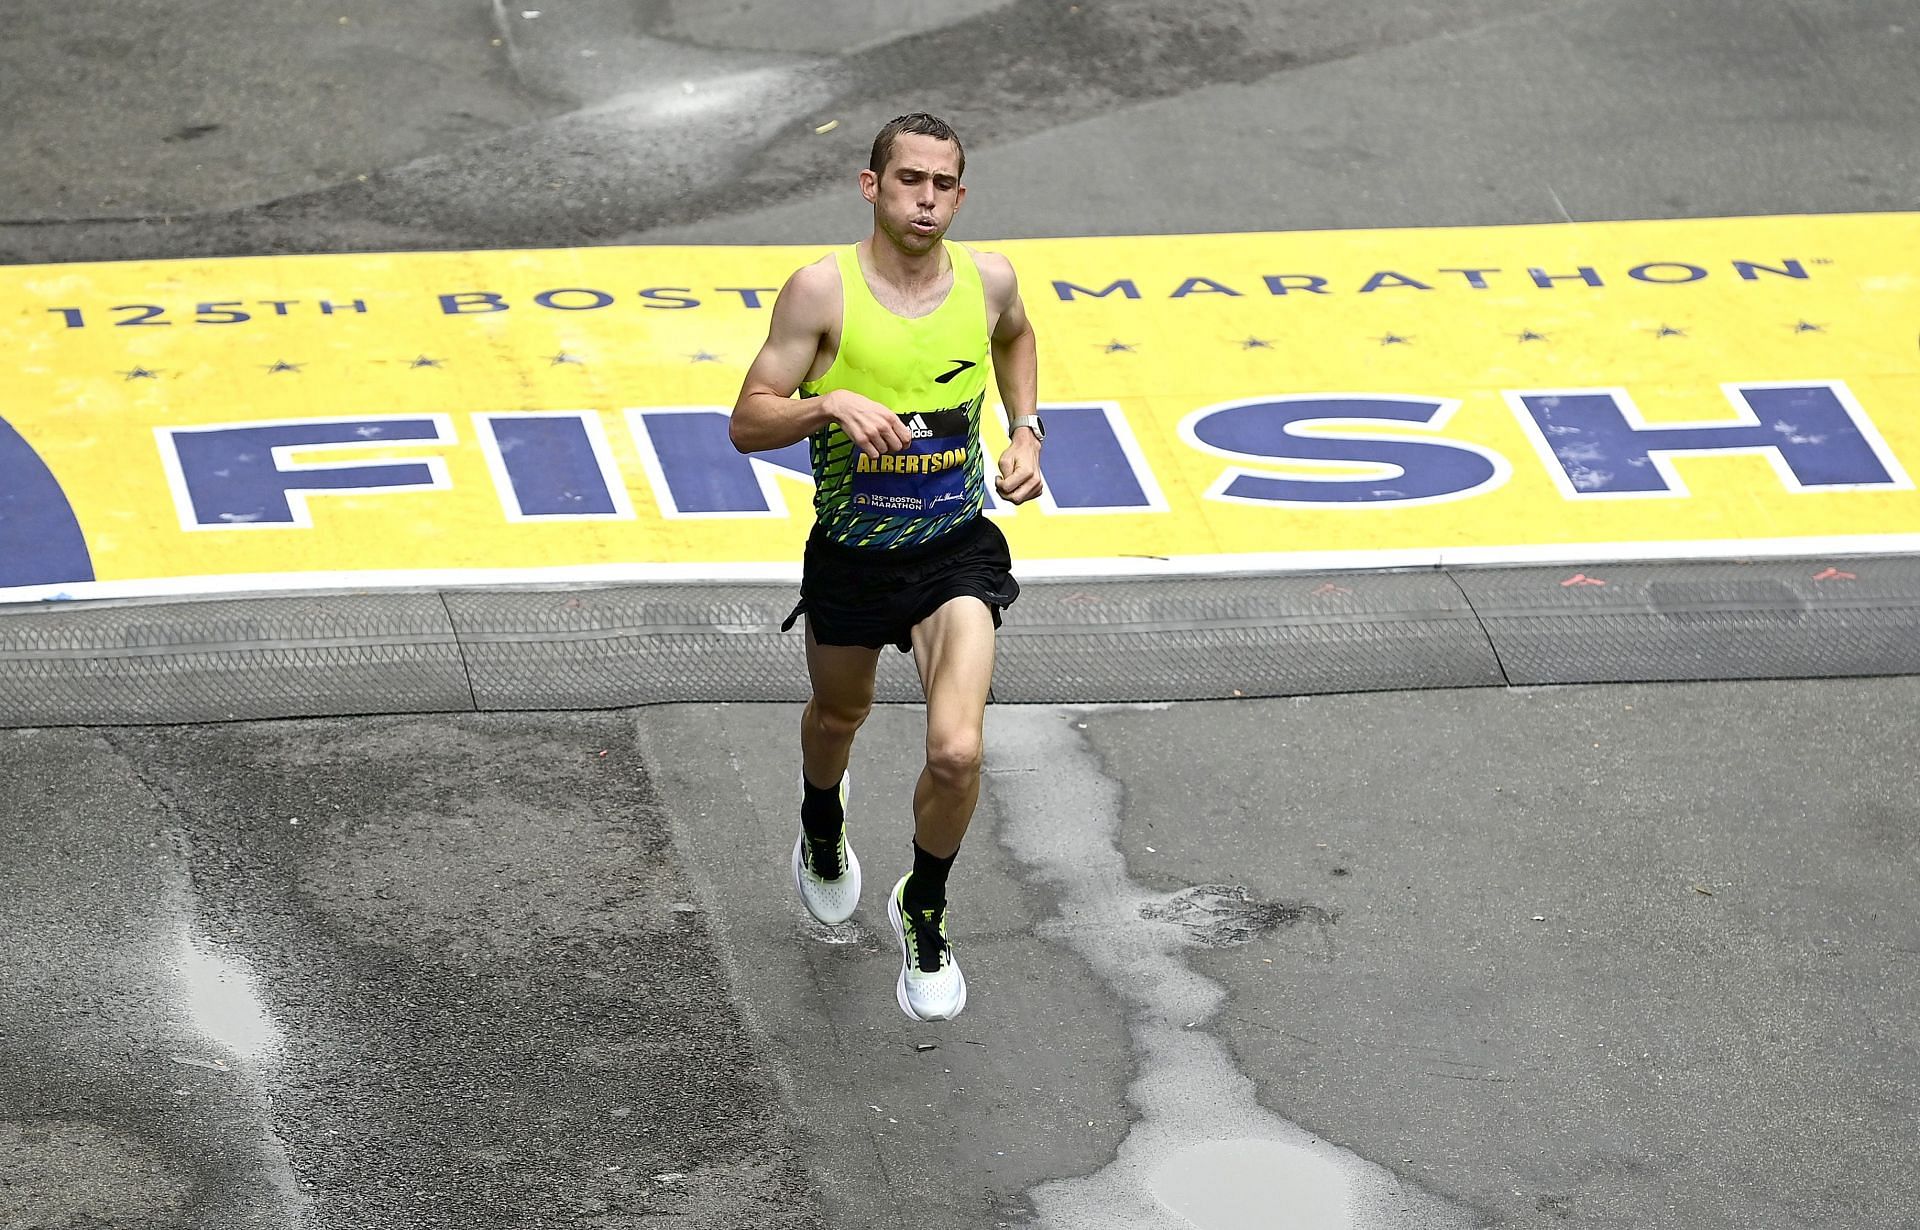 CJ Albertson of the United States crosses the finish line during the 125th Boston Marathon in 2021 in Boston, Massachusetts.